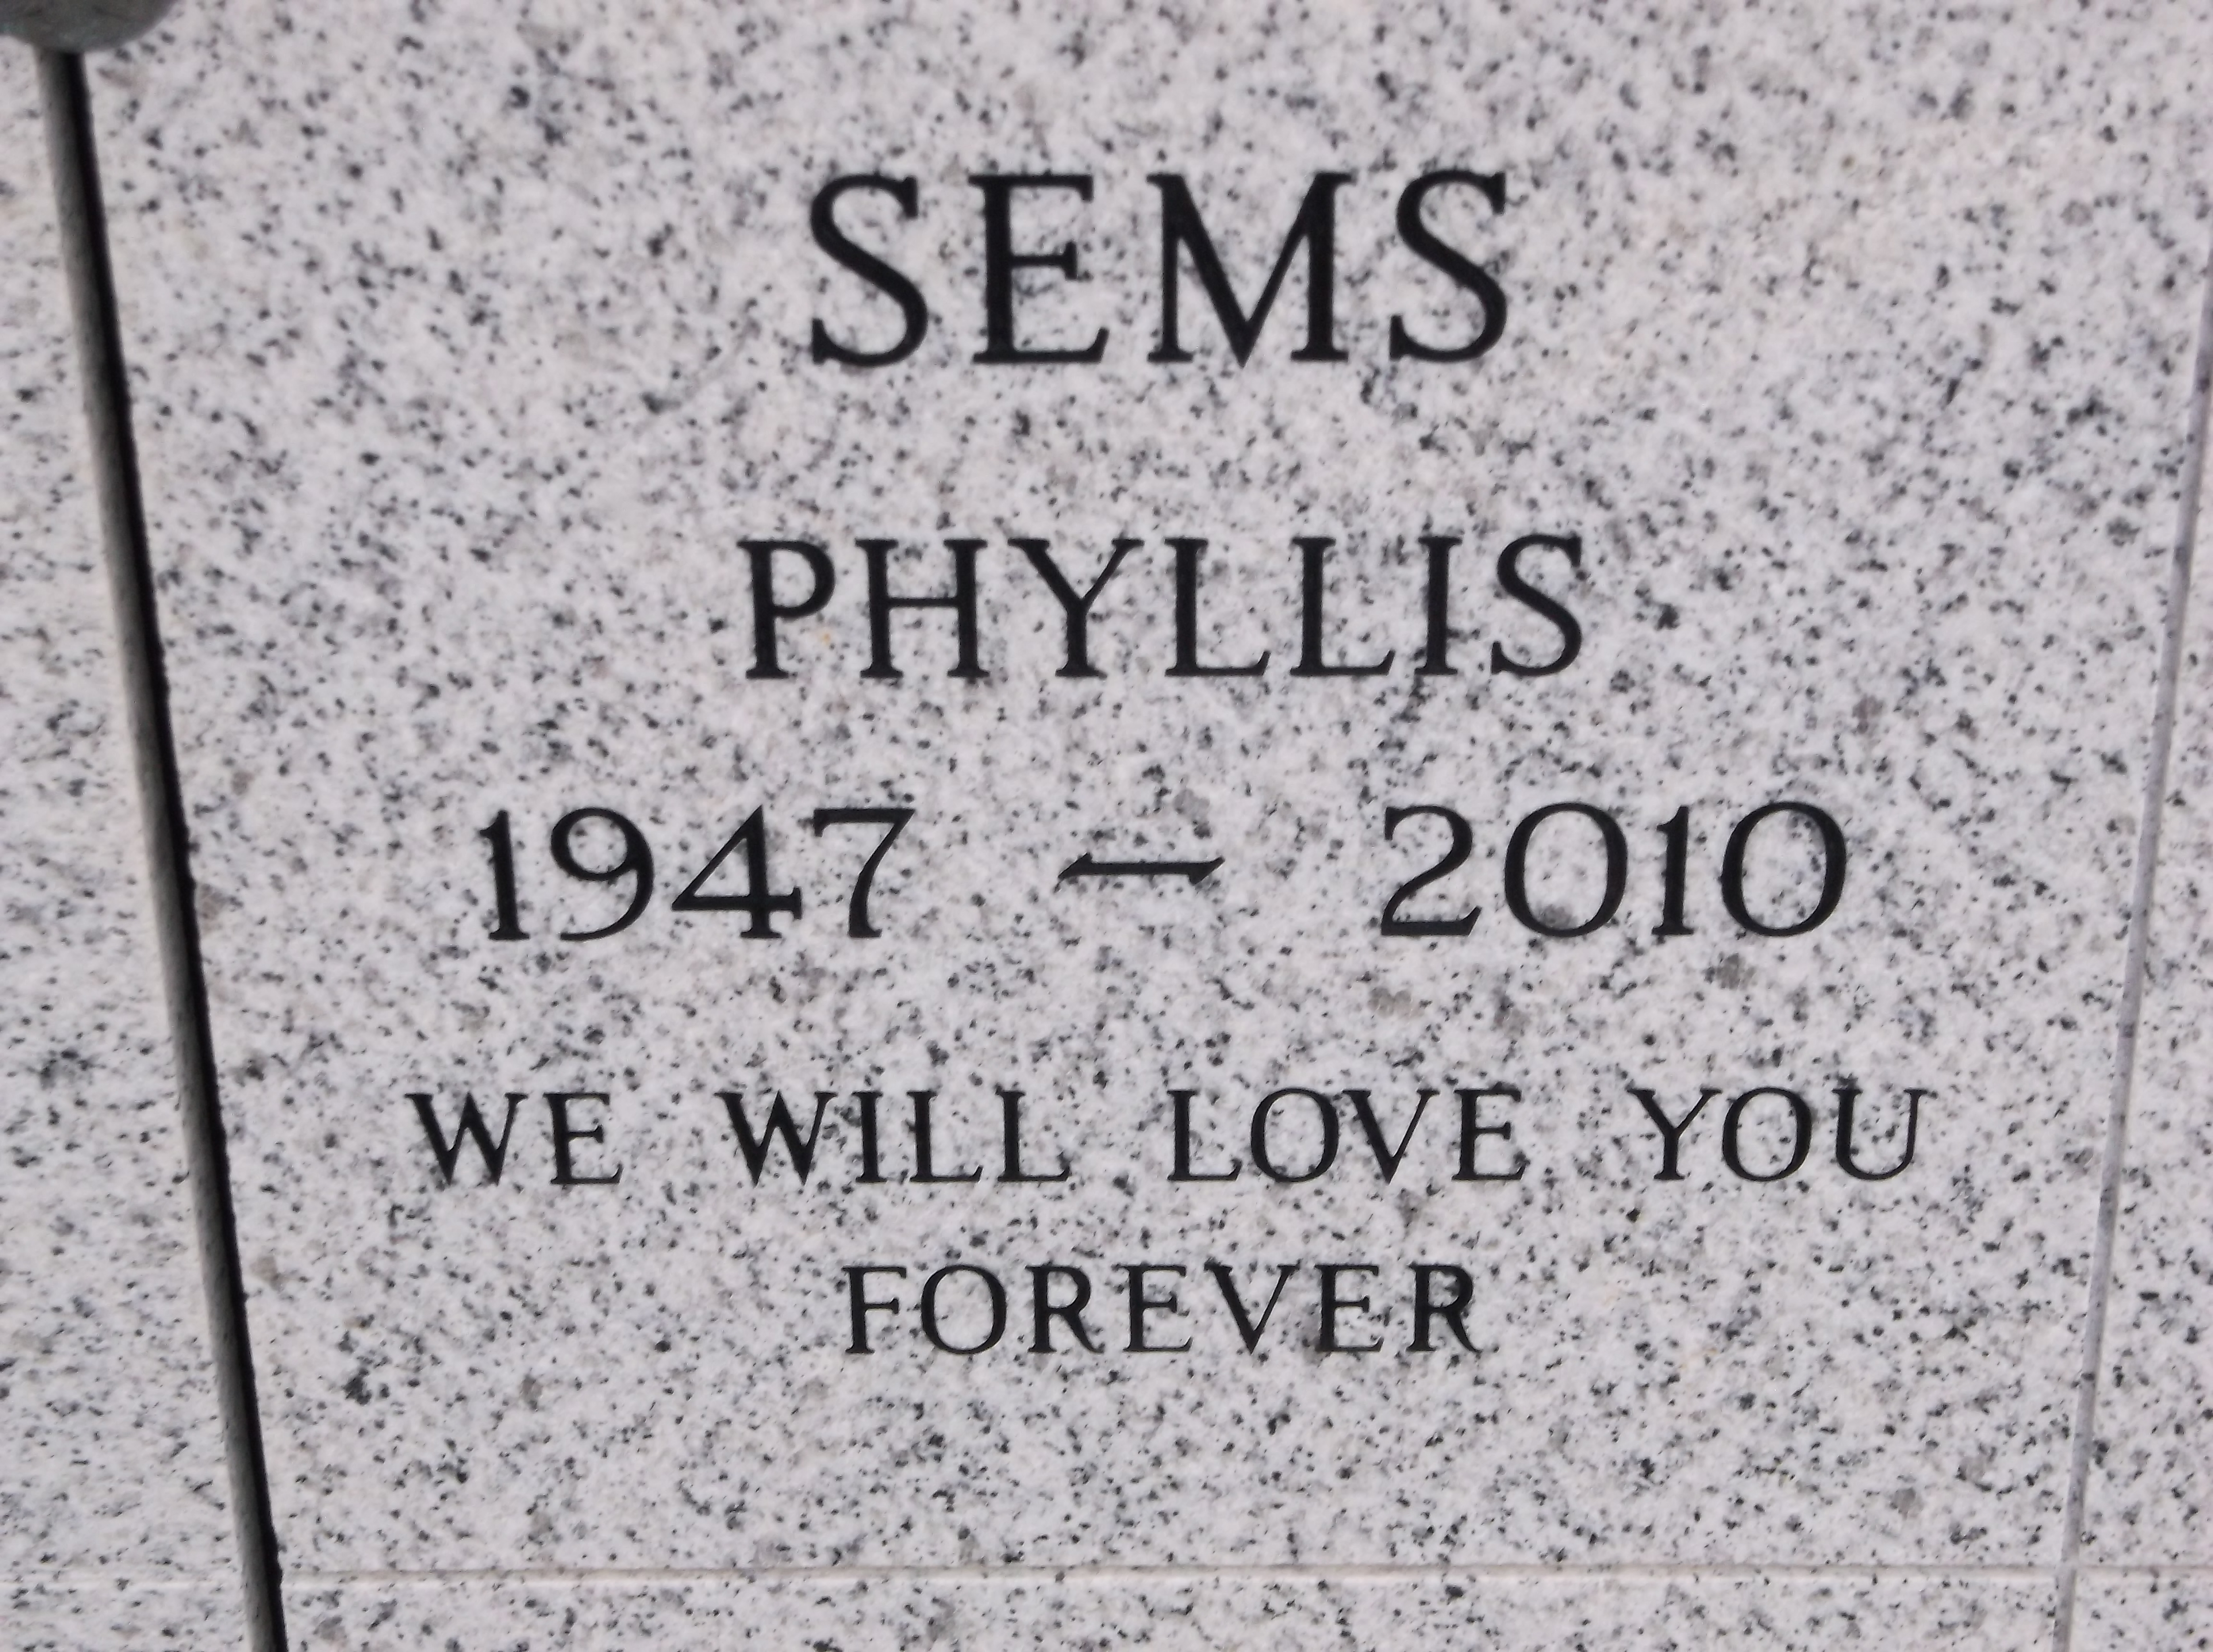 Phyllis Sems